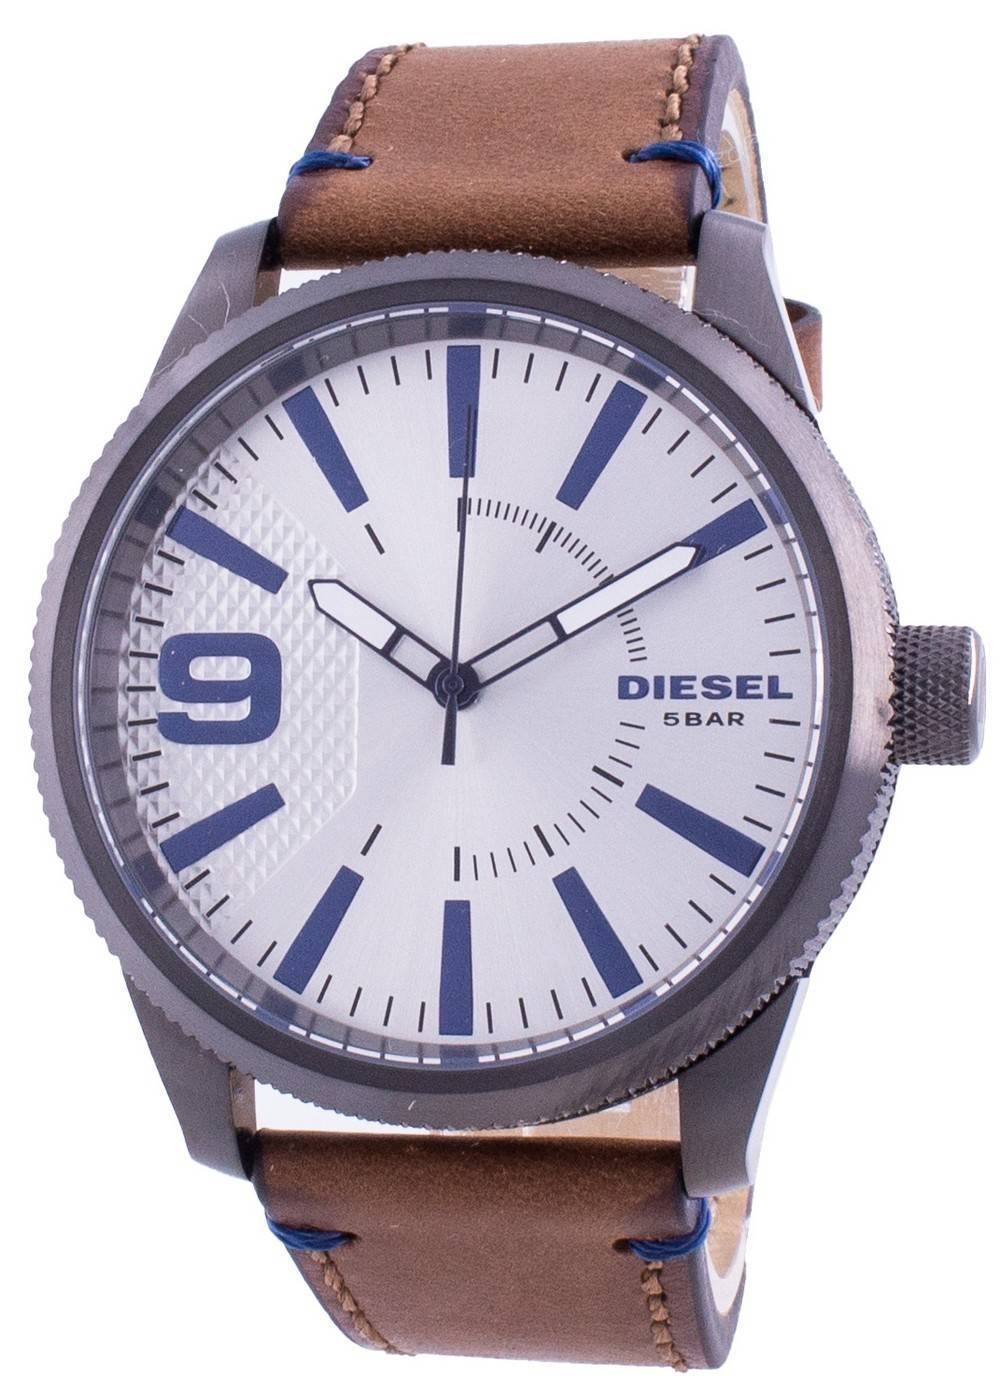 Diesel Watch Bar | ubicaciondepersonas.cdmx.gob.mx